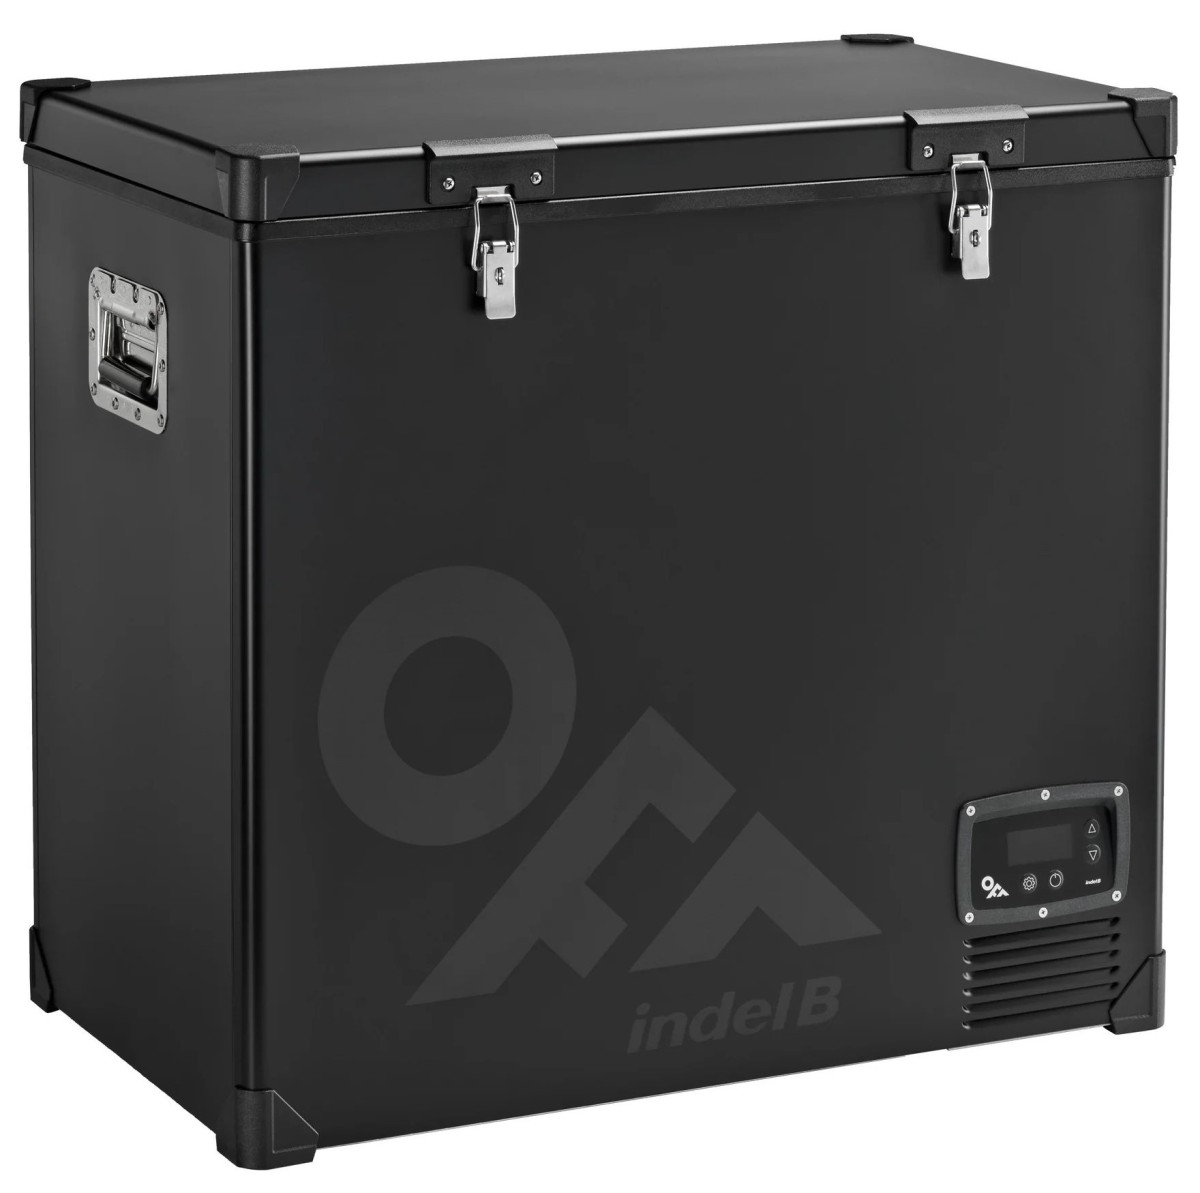 OFF by Indel B TB130 Steel Black Portable Refrigerator